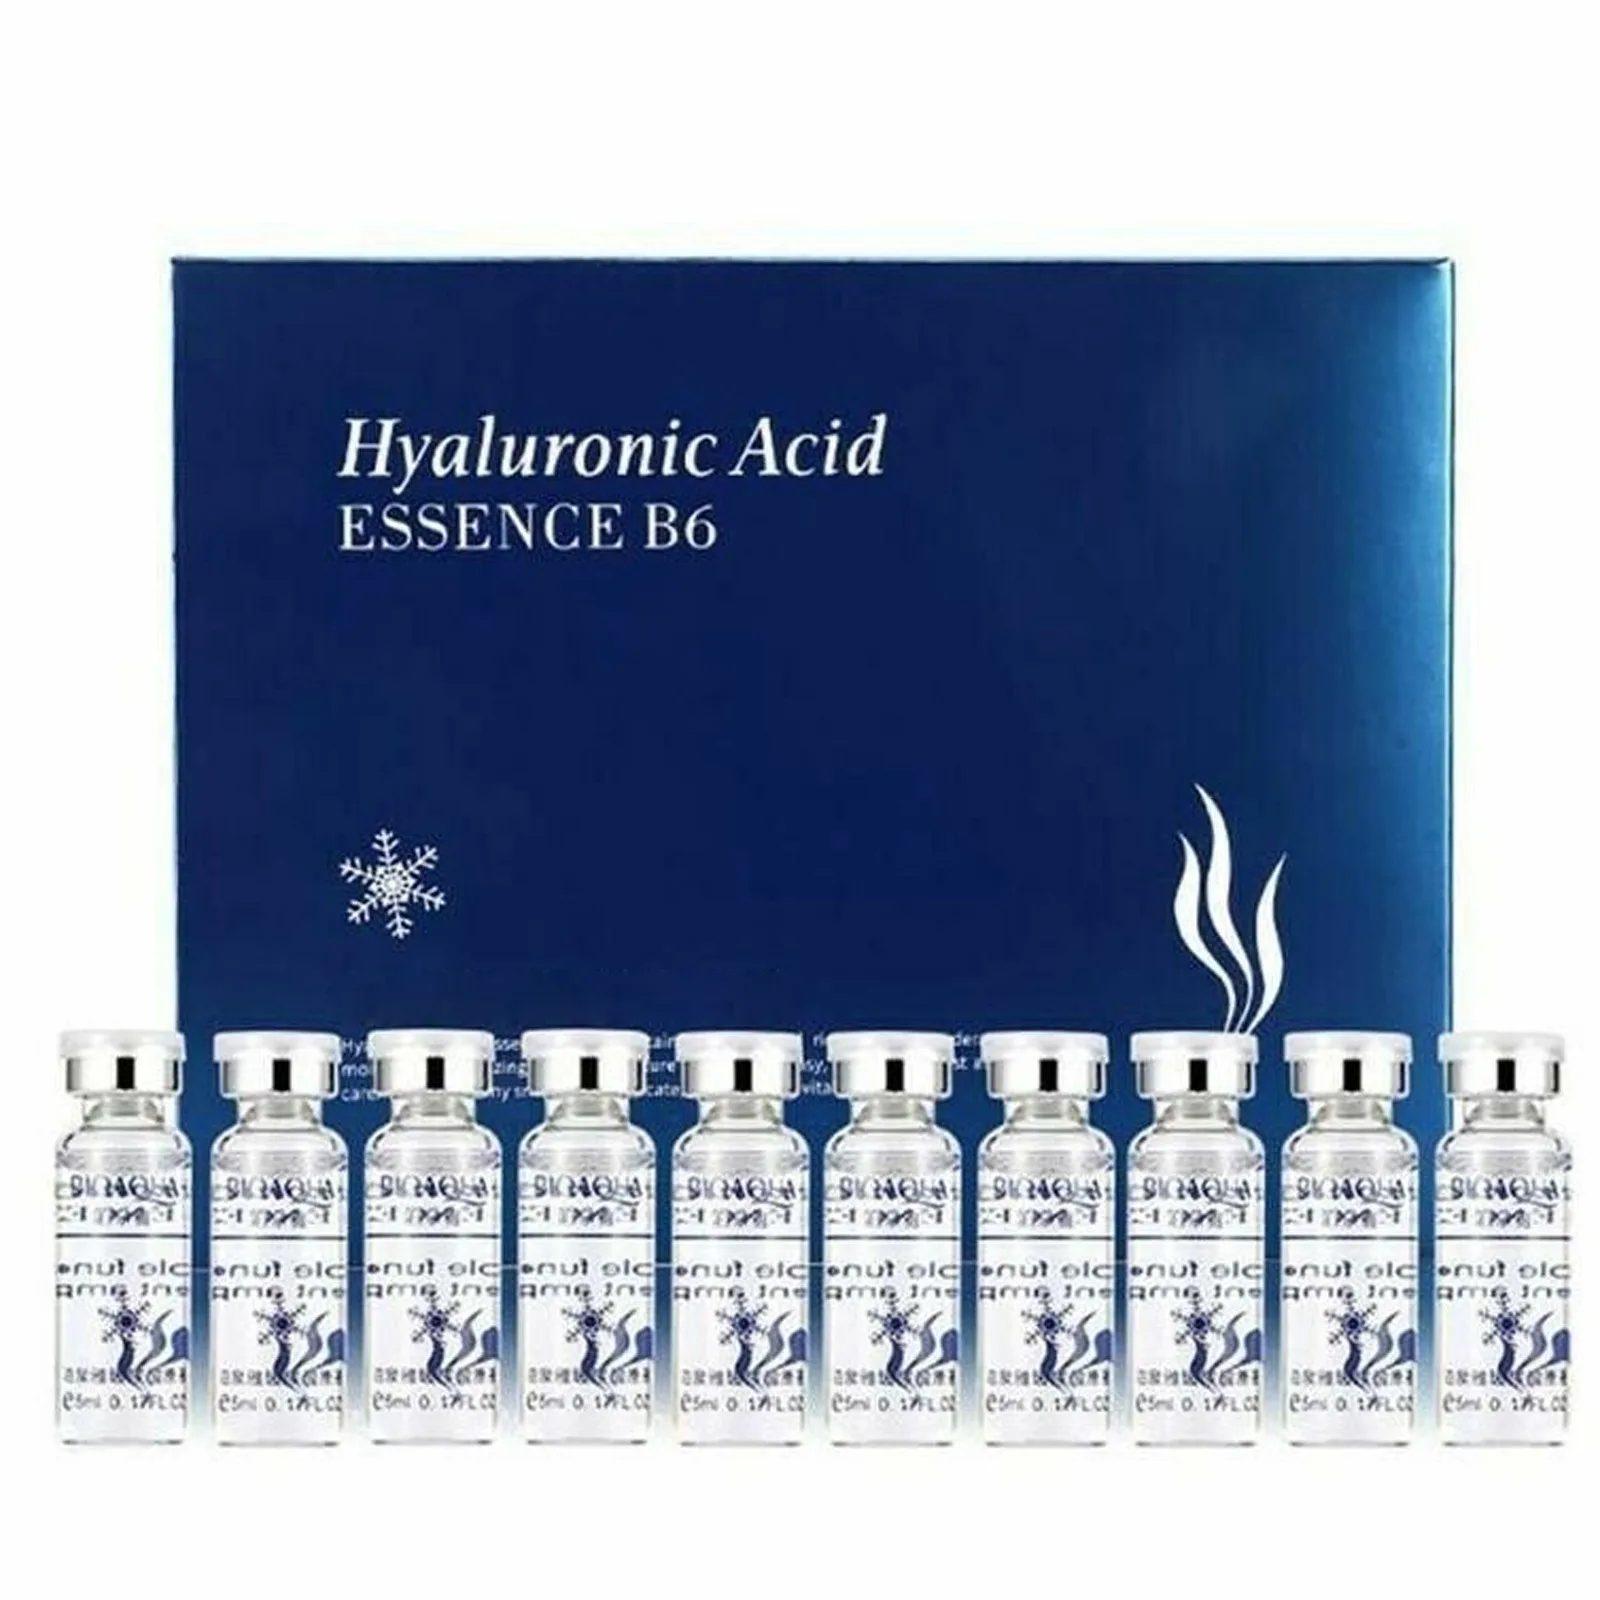 

10 Bottles Hyaluronic Acid Essence B6 Moisturizing Vitamins Serum Facial Skin Care Anti Wrinkle Anti Aging Collagen Liquid